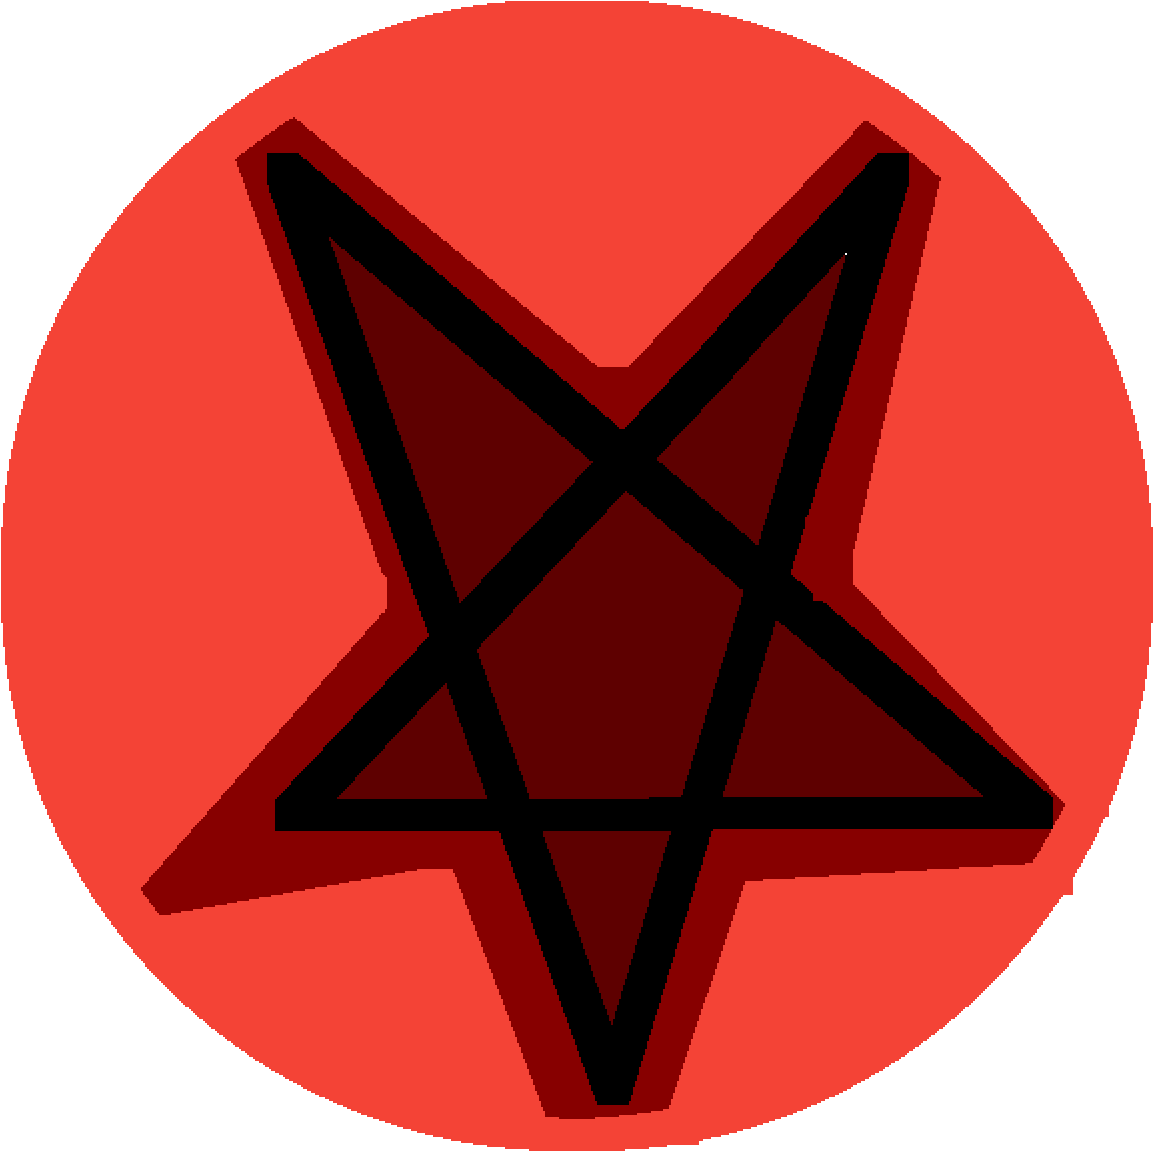 Satanic Clipart Star - Circle - Png Download (1400x1400), Png Download